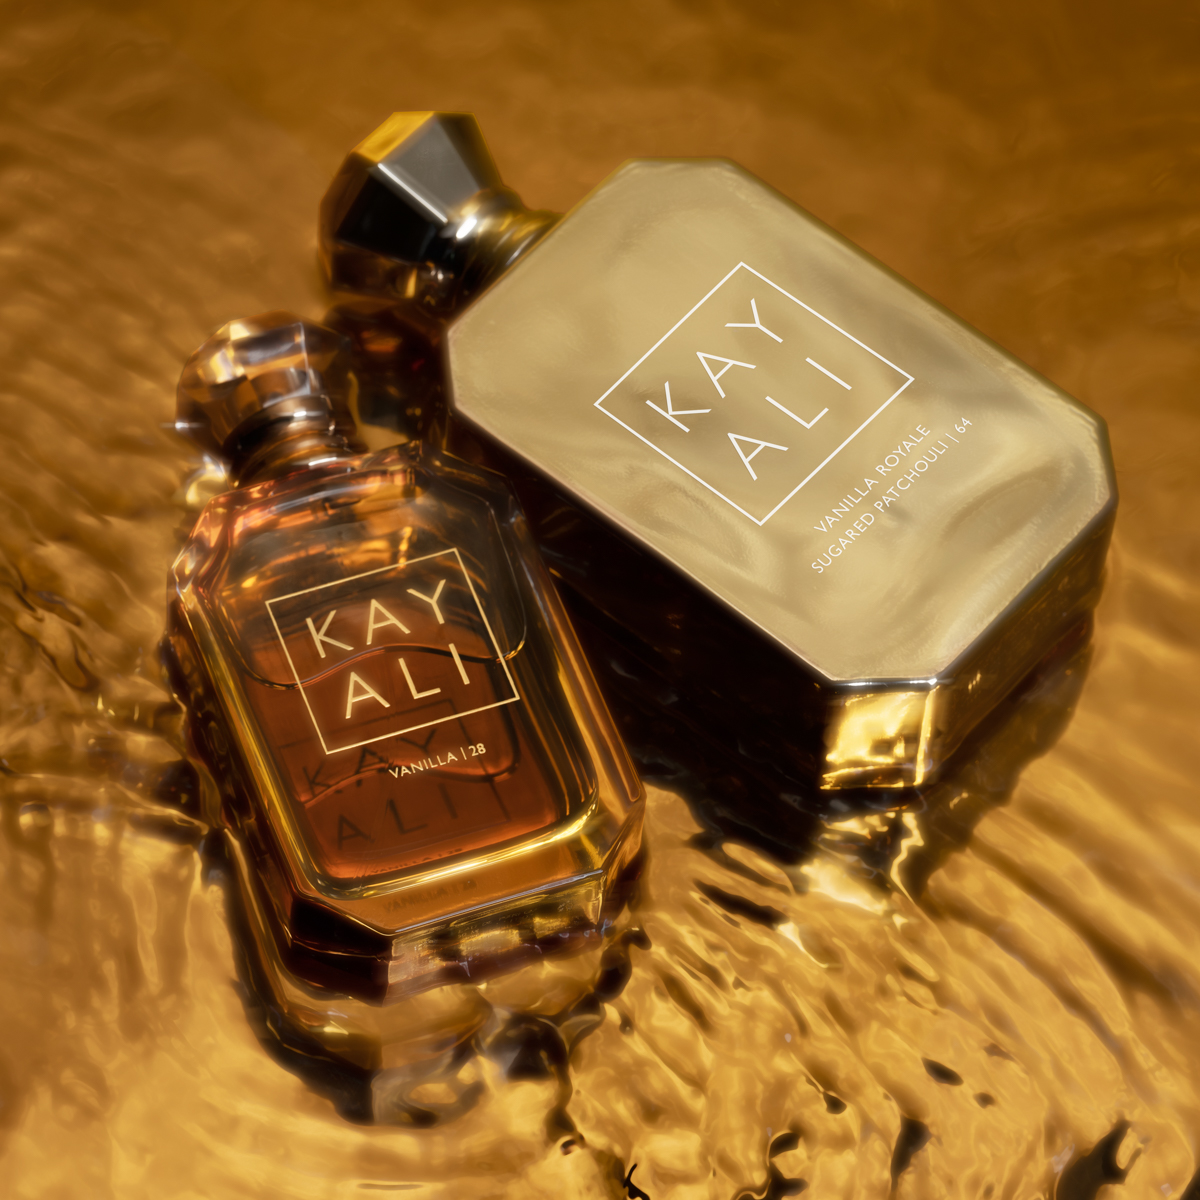 Second Chance - Kayali Perfume!! : r/Ipsy